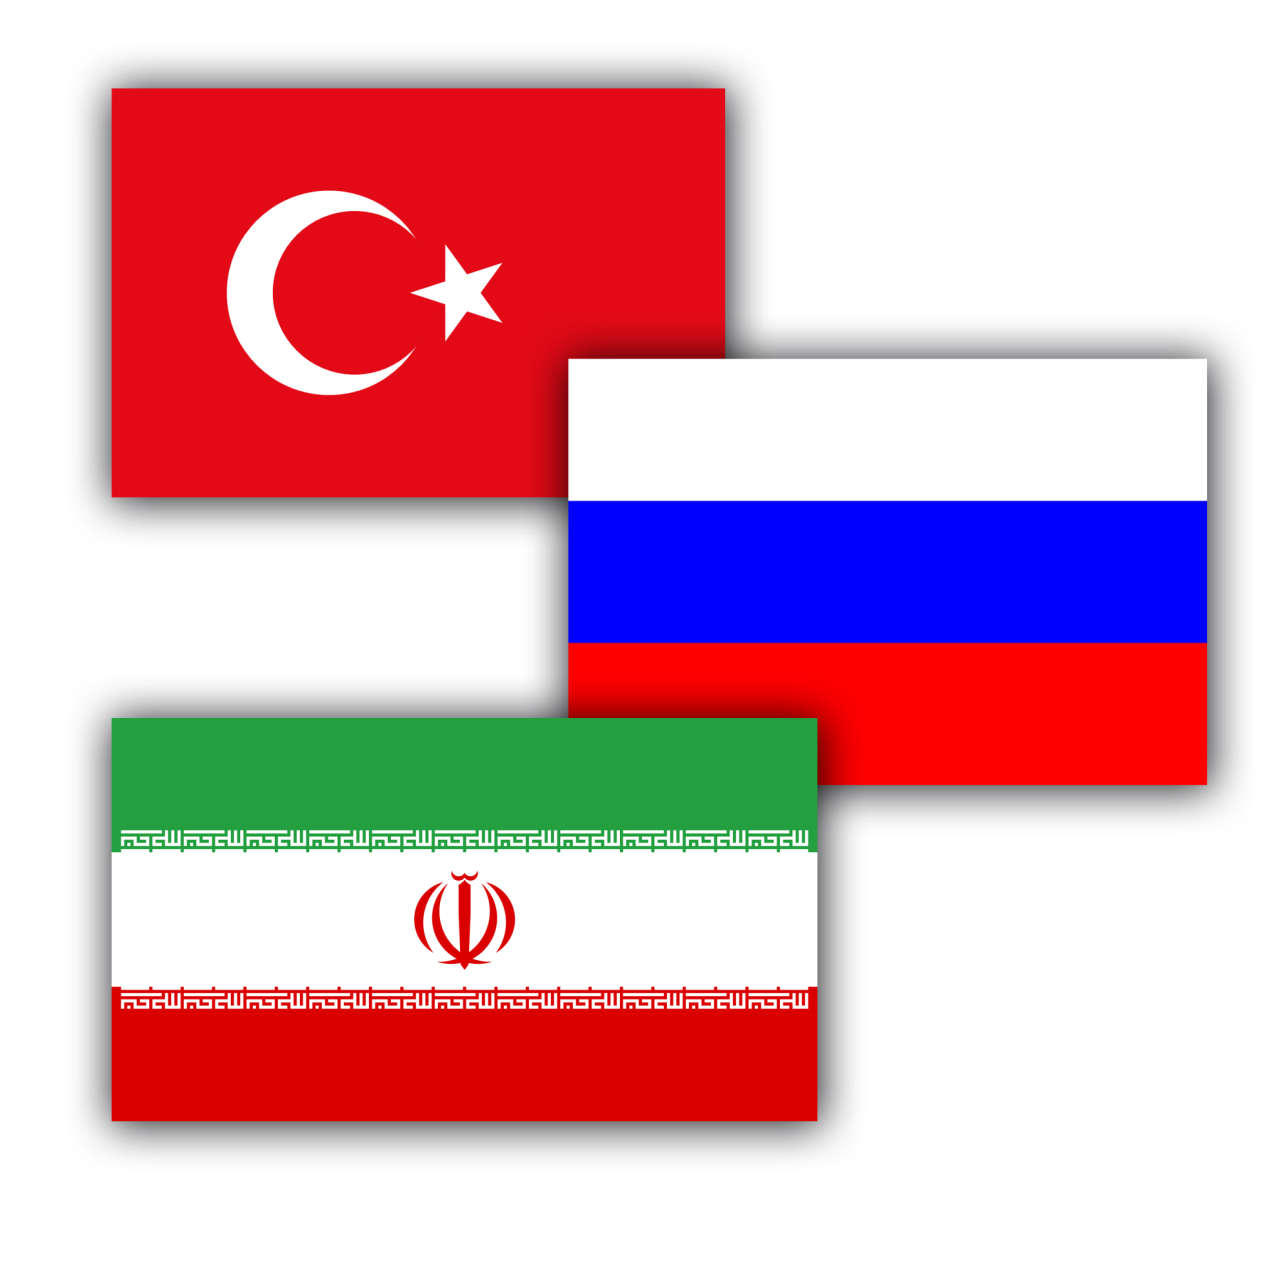 Iran, Russia, Turkey discussed non-dollar trade at summit in Tehran - reports